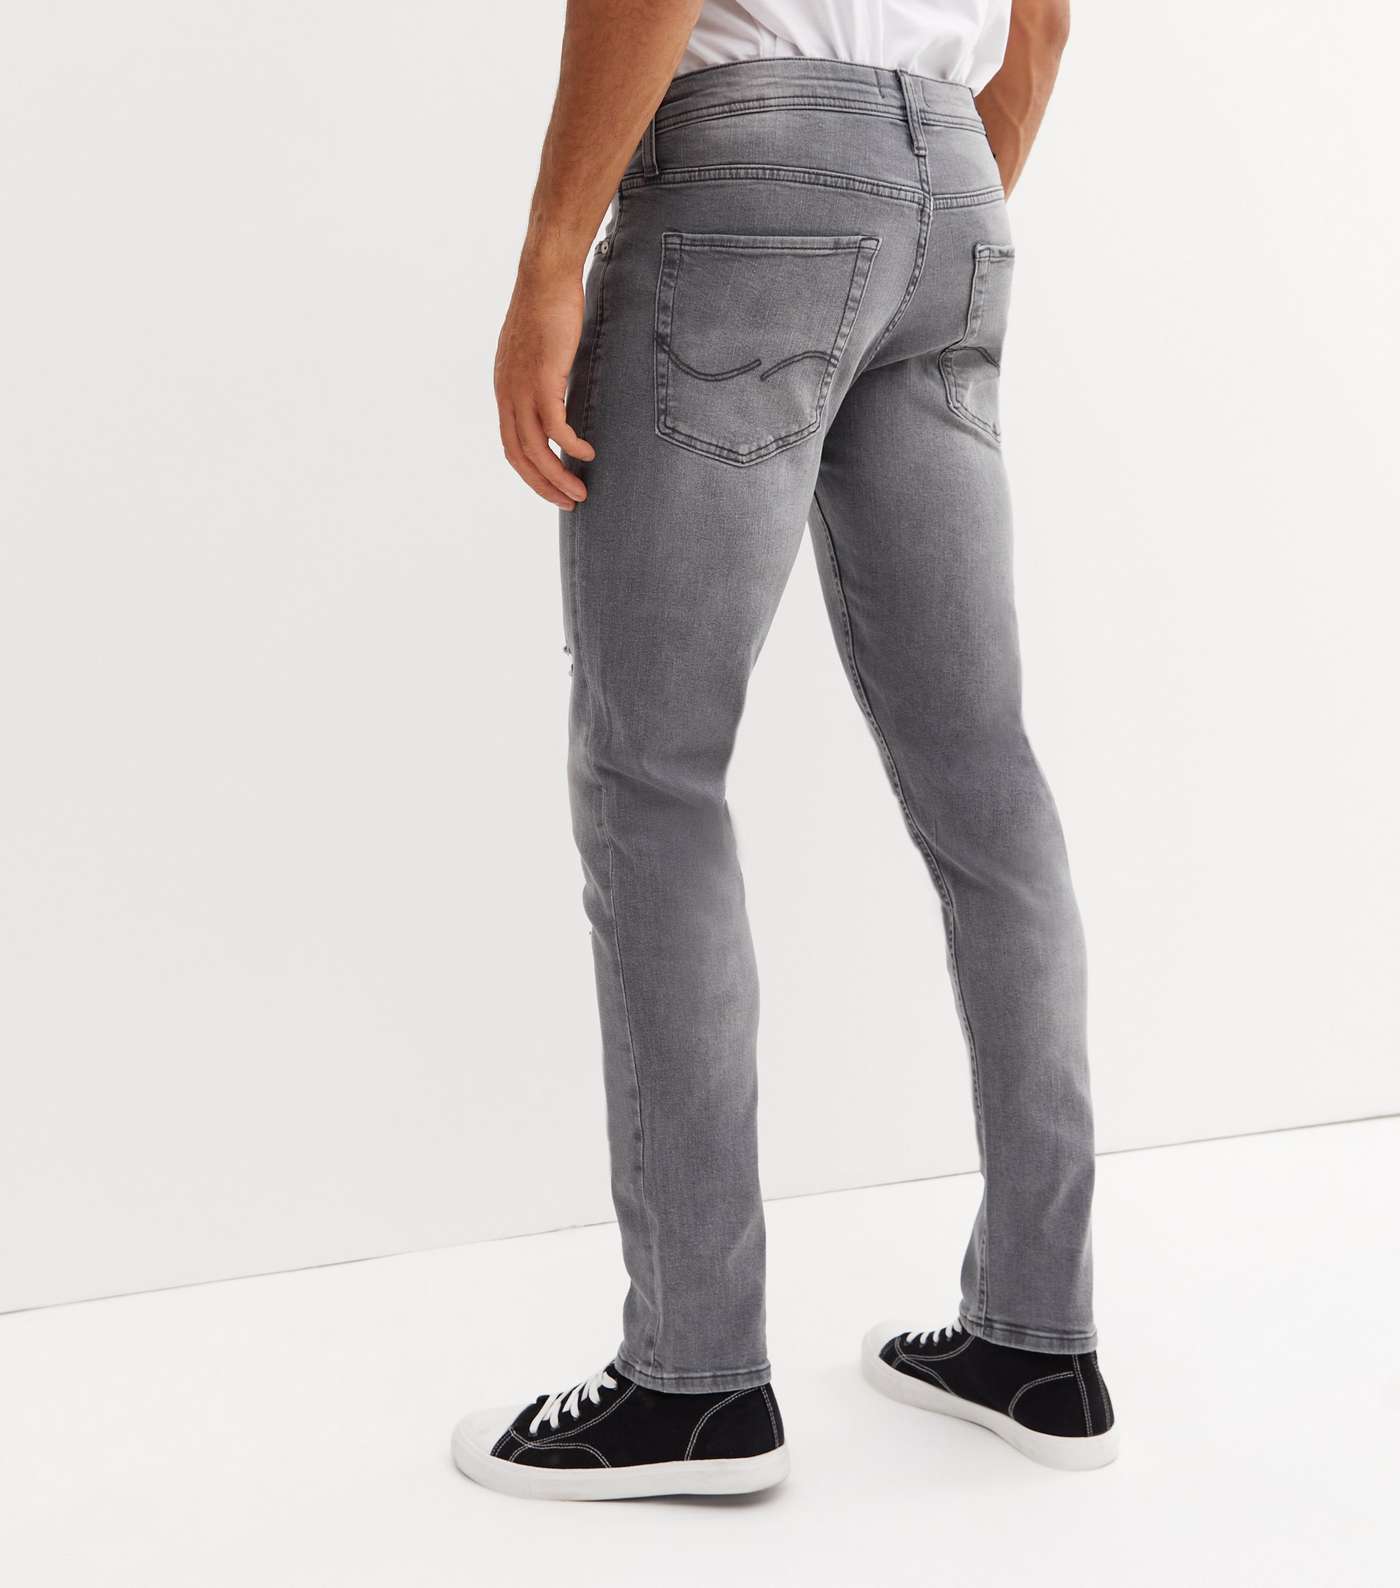 Jack & Jones Grey Ripped Slim Fit Jeans Image 4